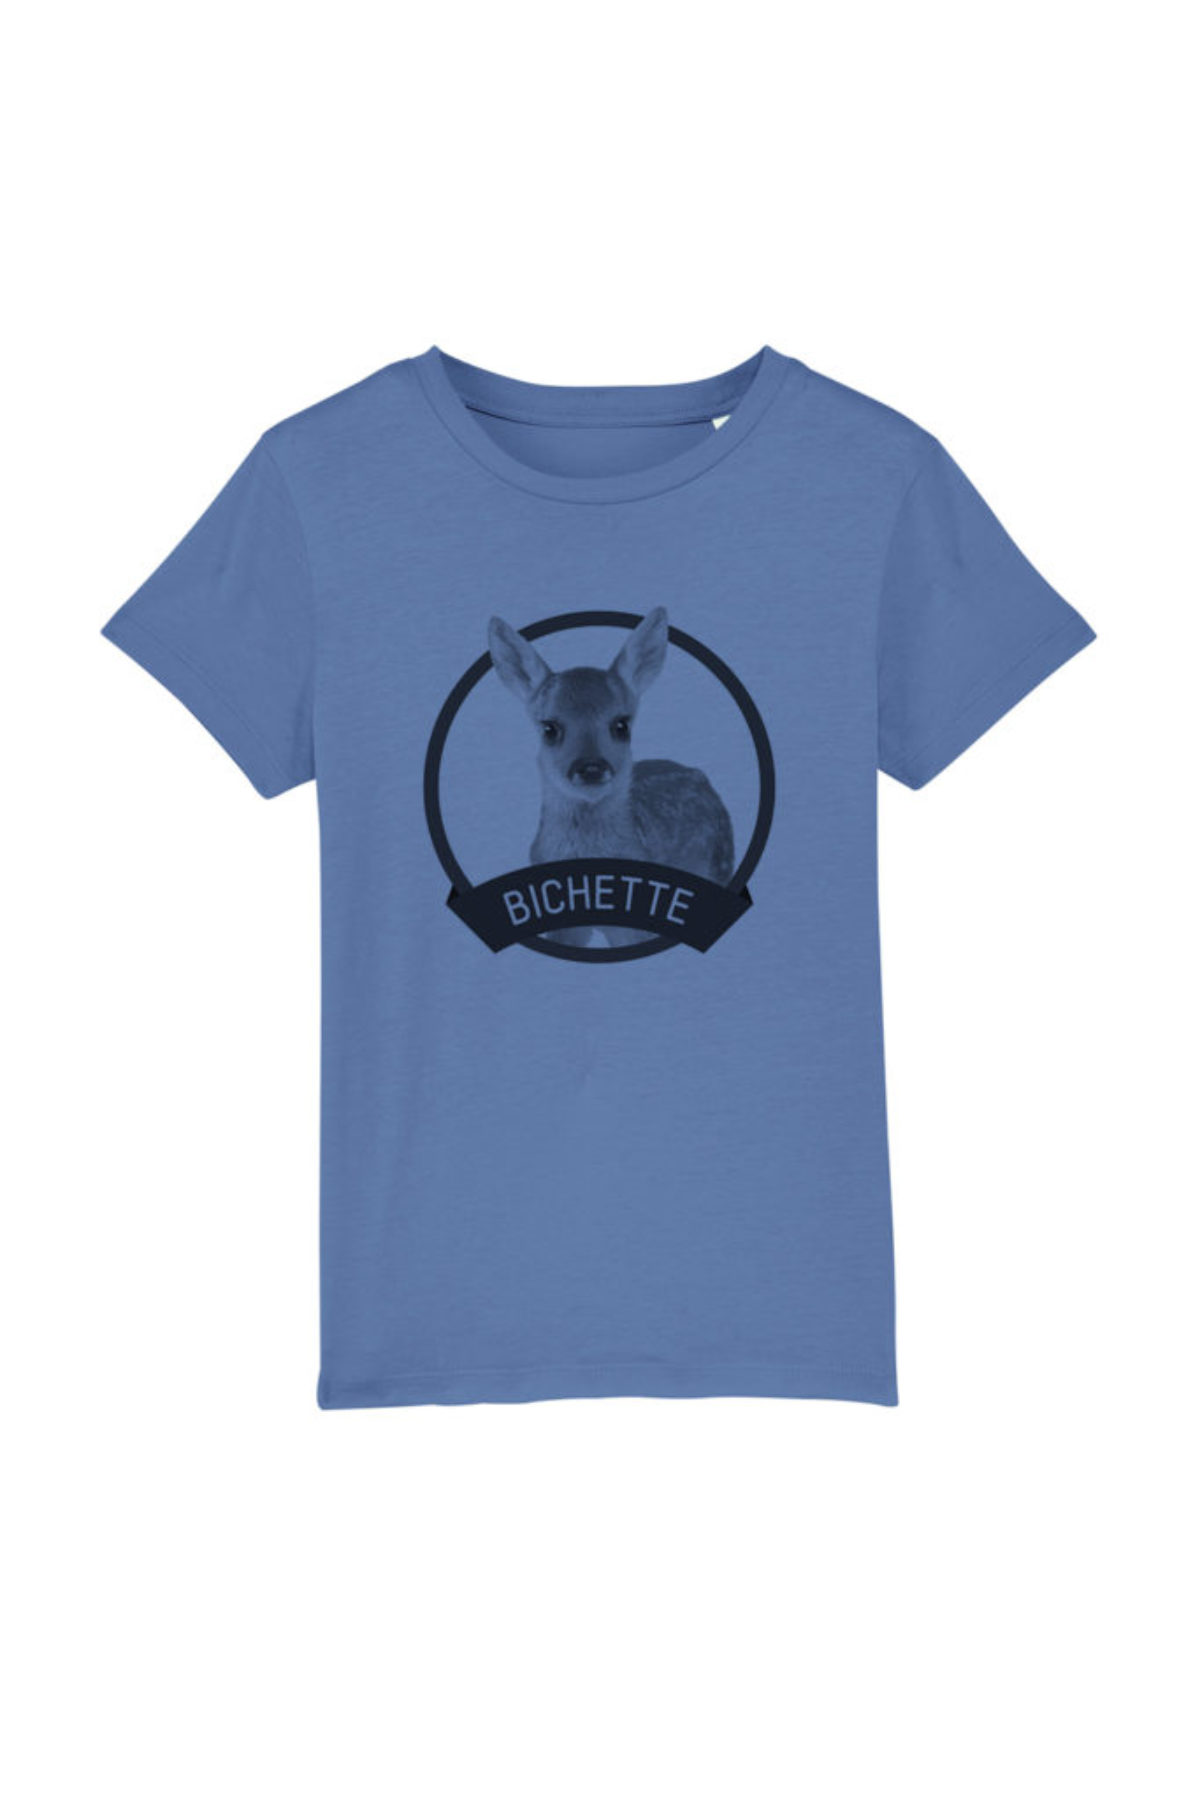 T-shirt enfant - Bichette